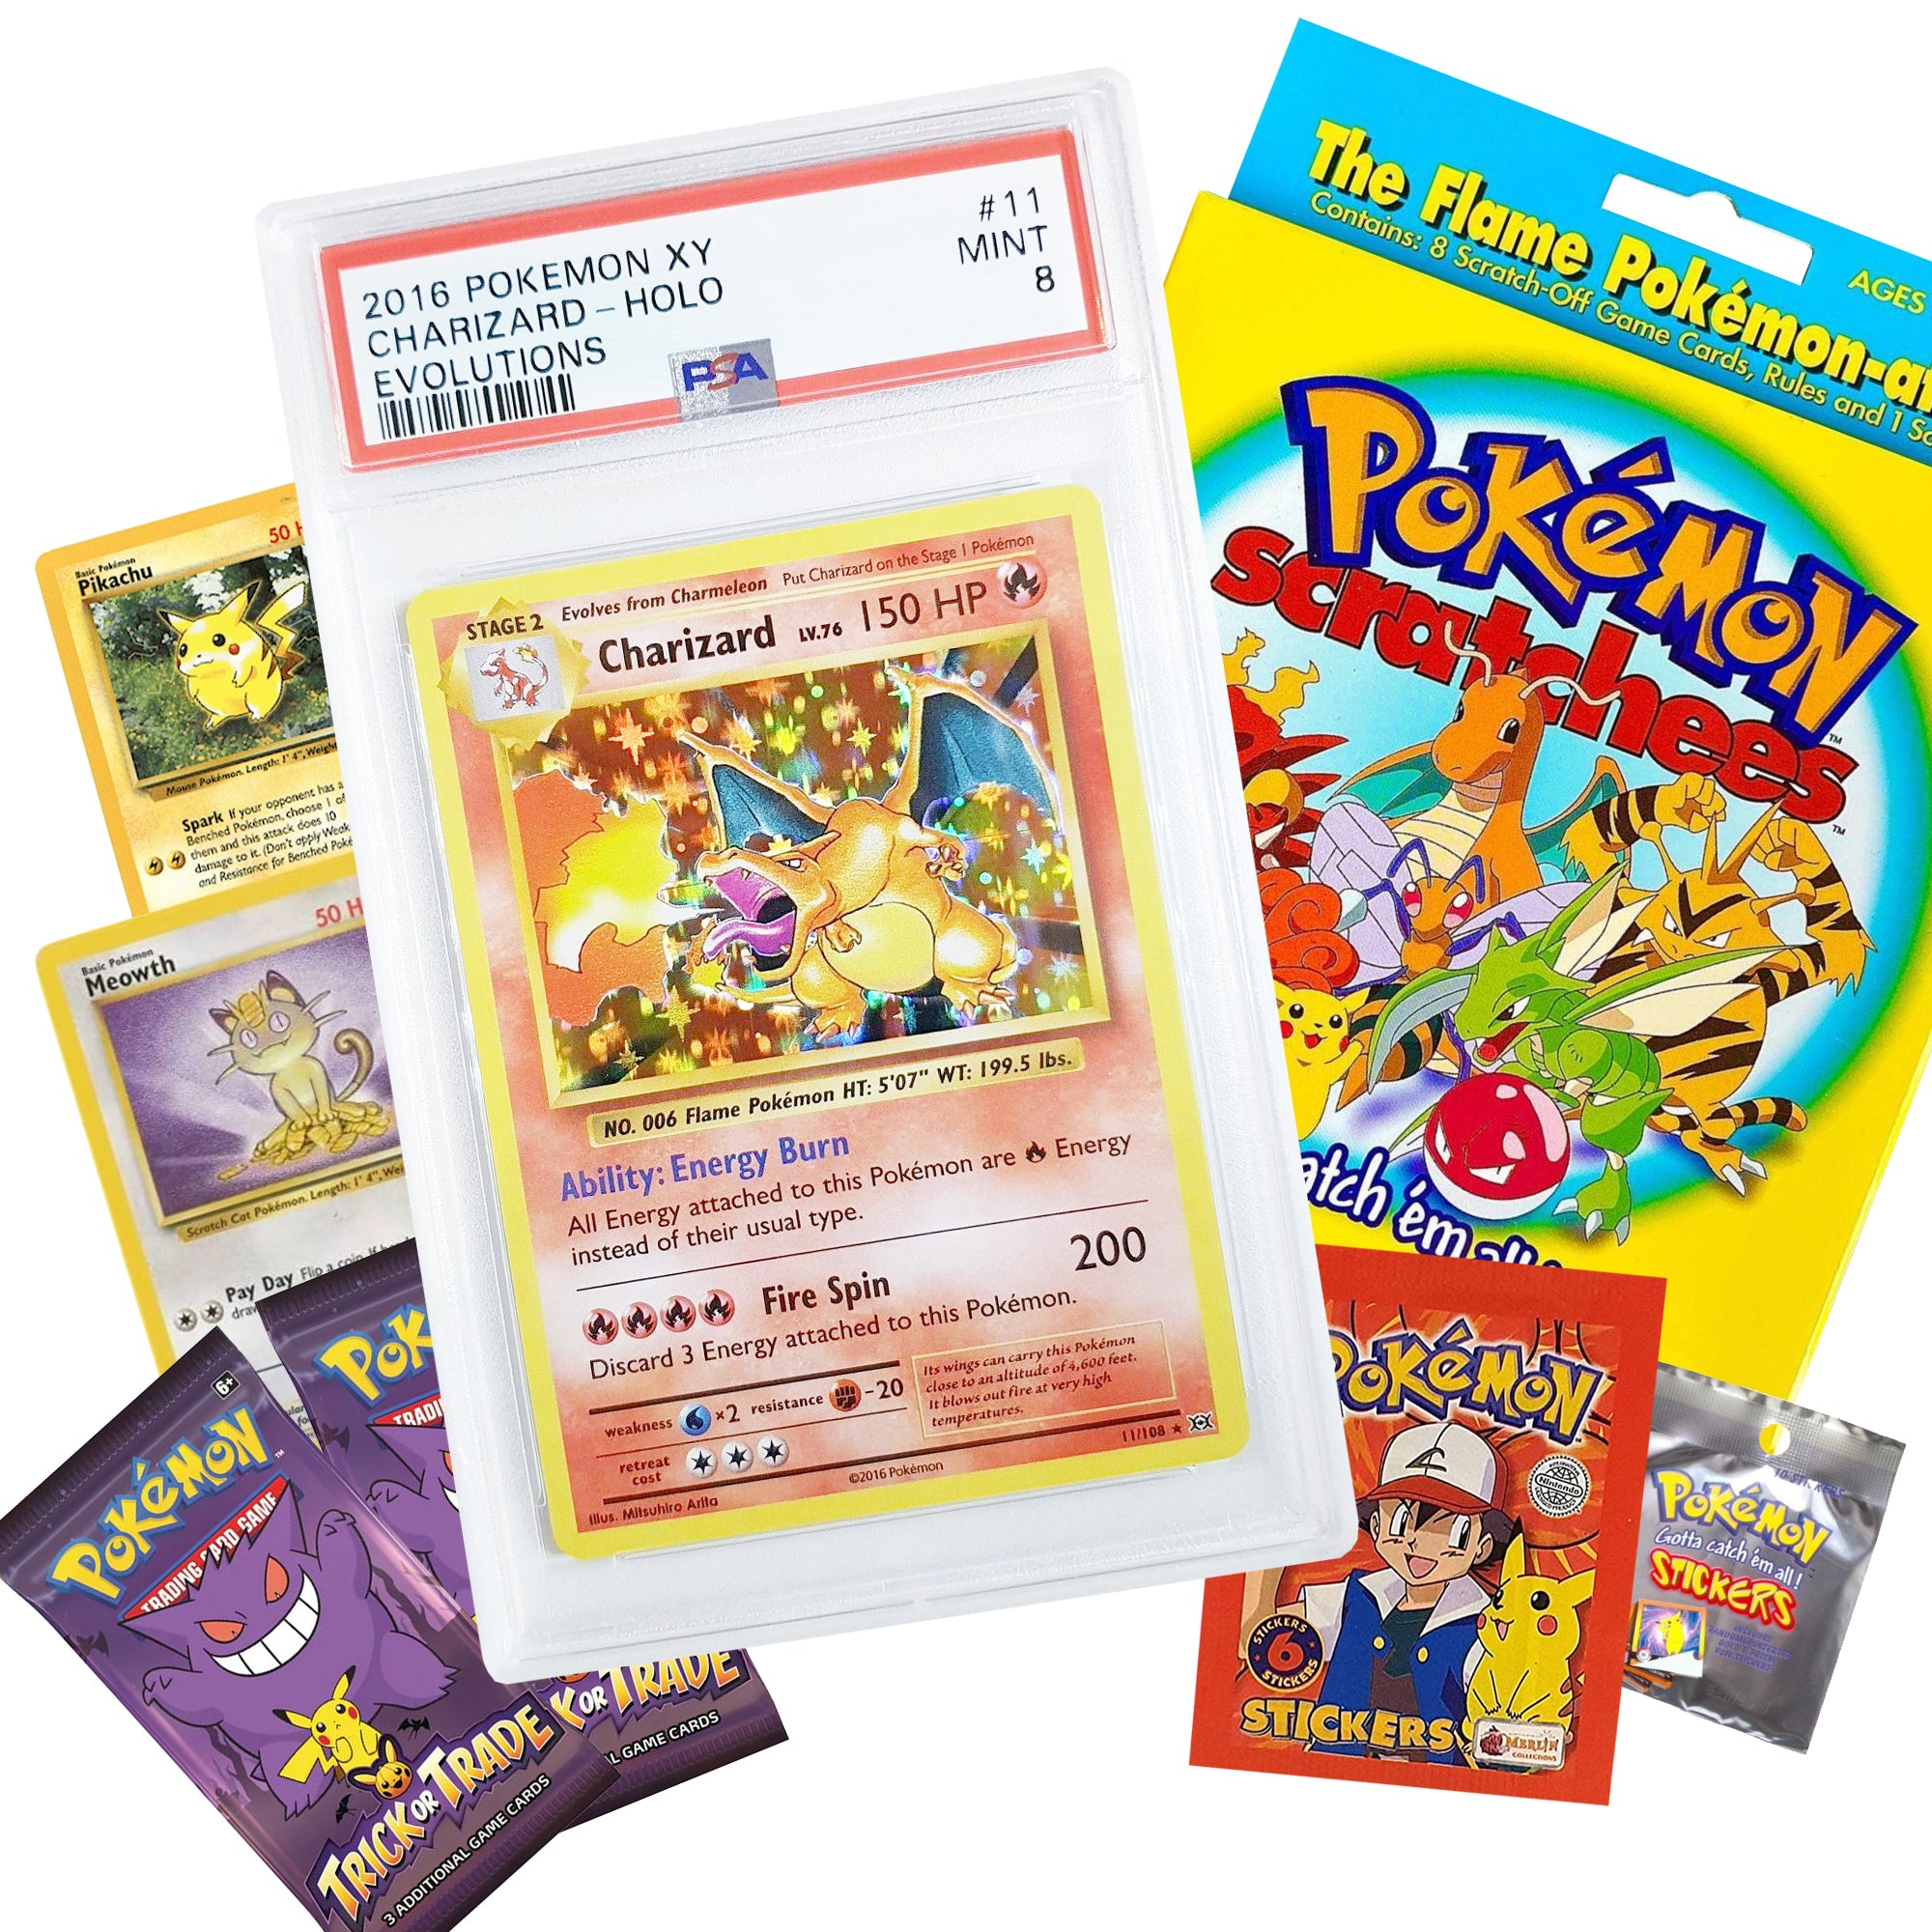 3 Pokemon Cards GX - Real Pokemon Cards - Best Poland